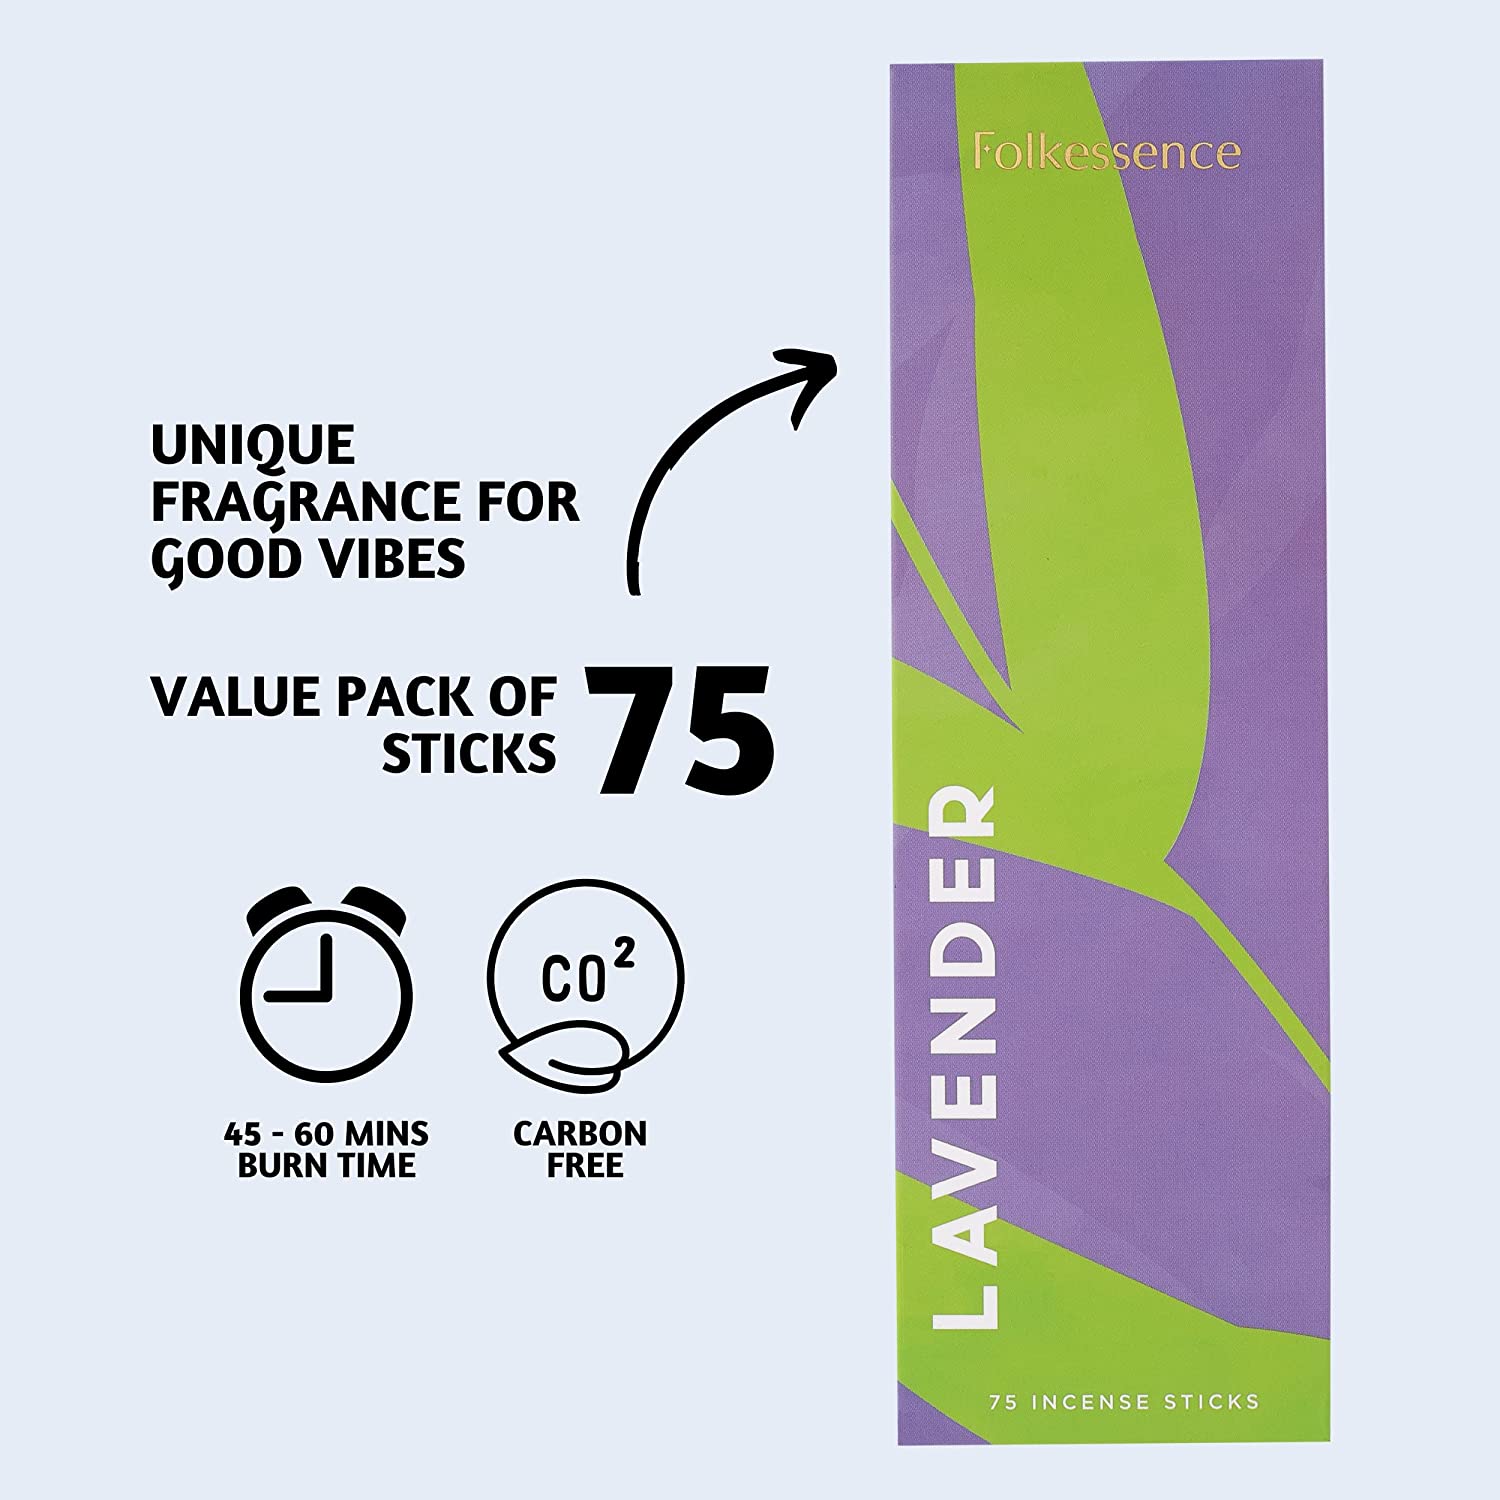 #fragrance_lavender